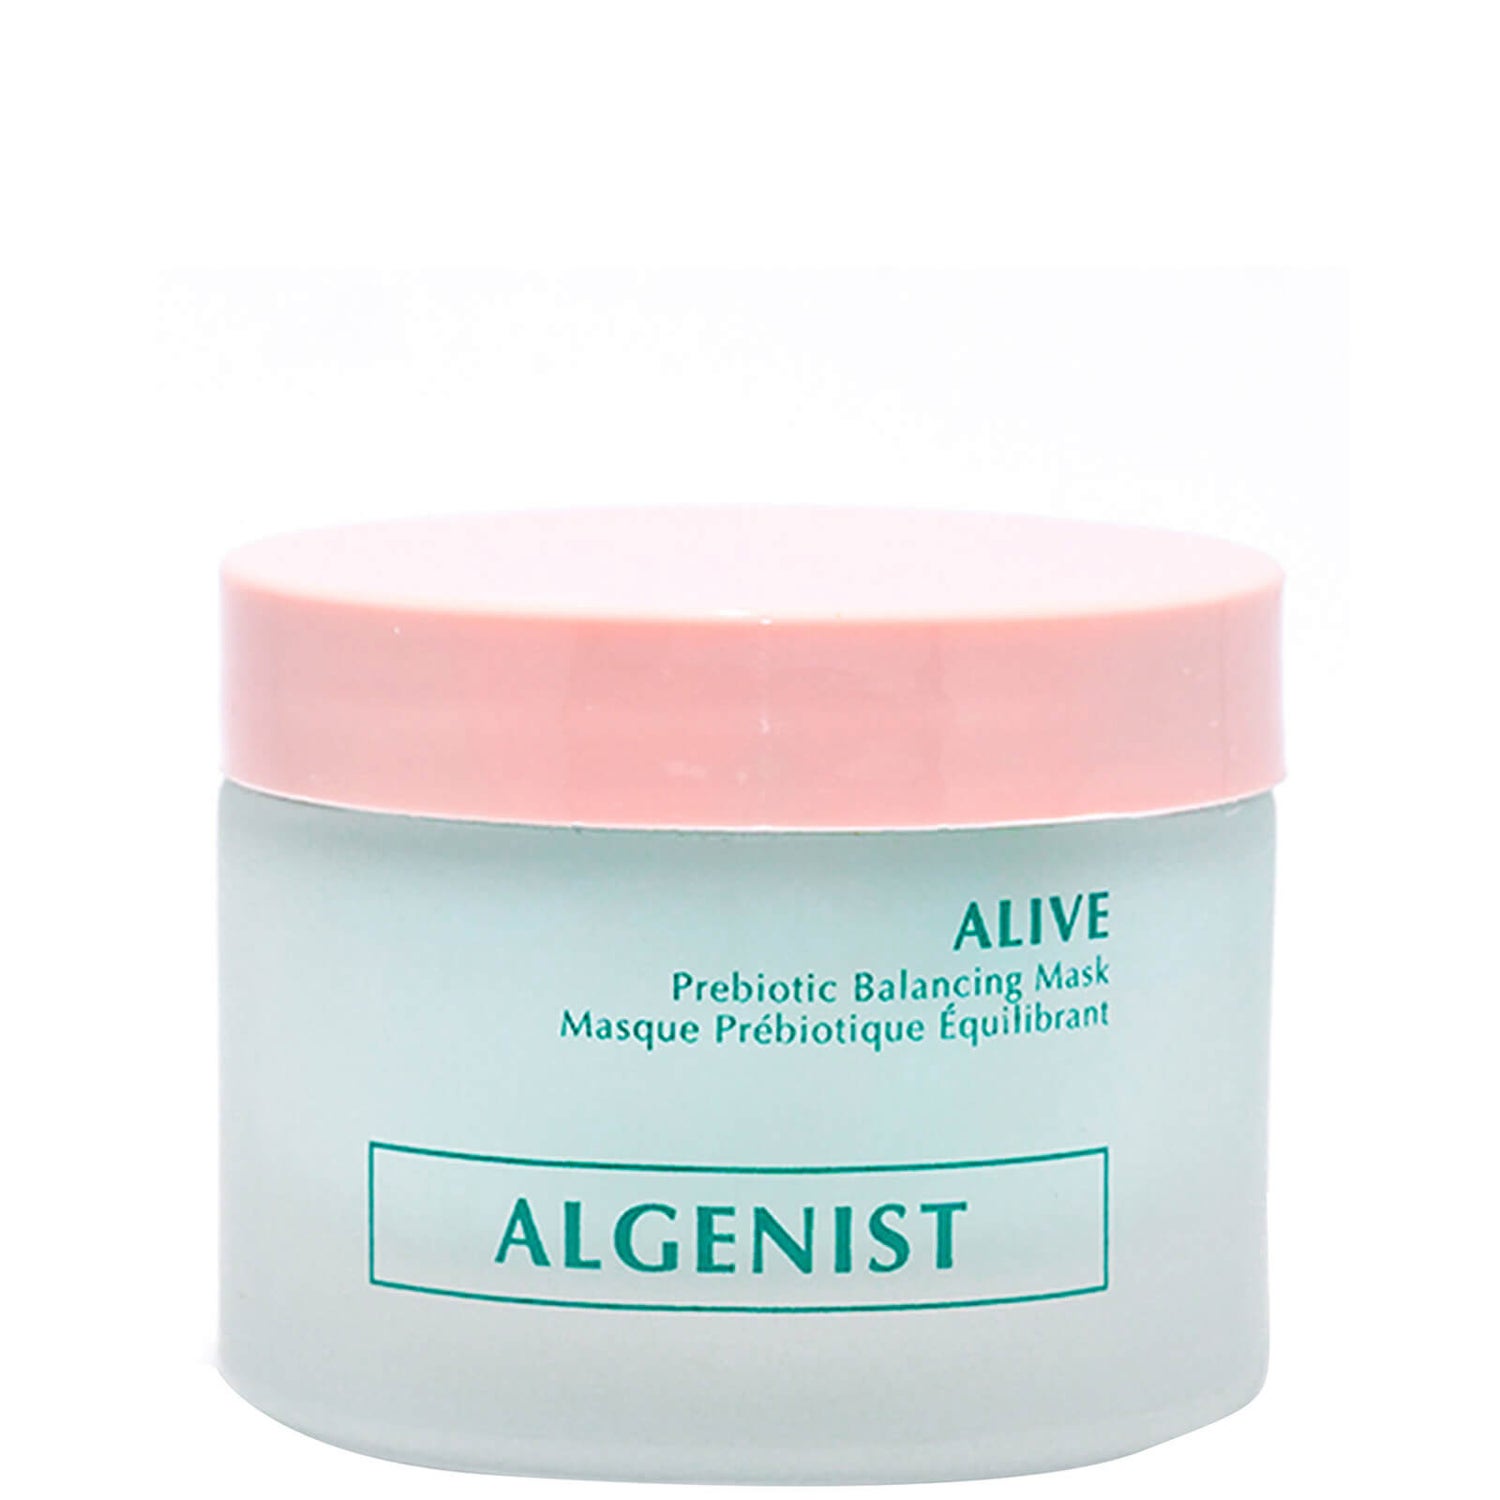 ALGENIST ALIVE Prebiotic Balancing Mask 50 ml